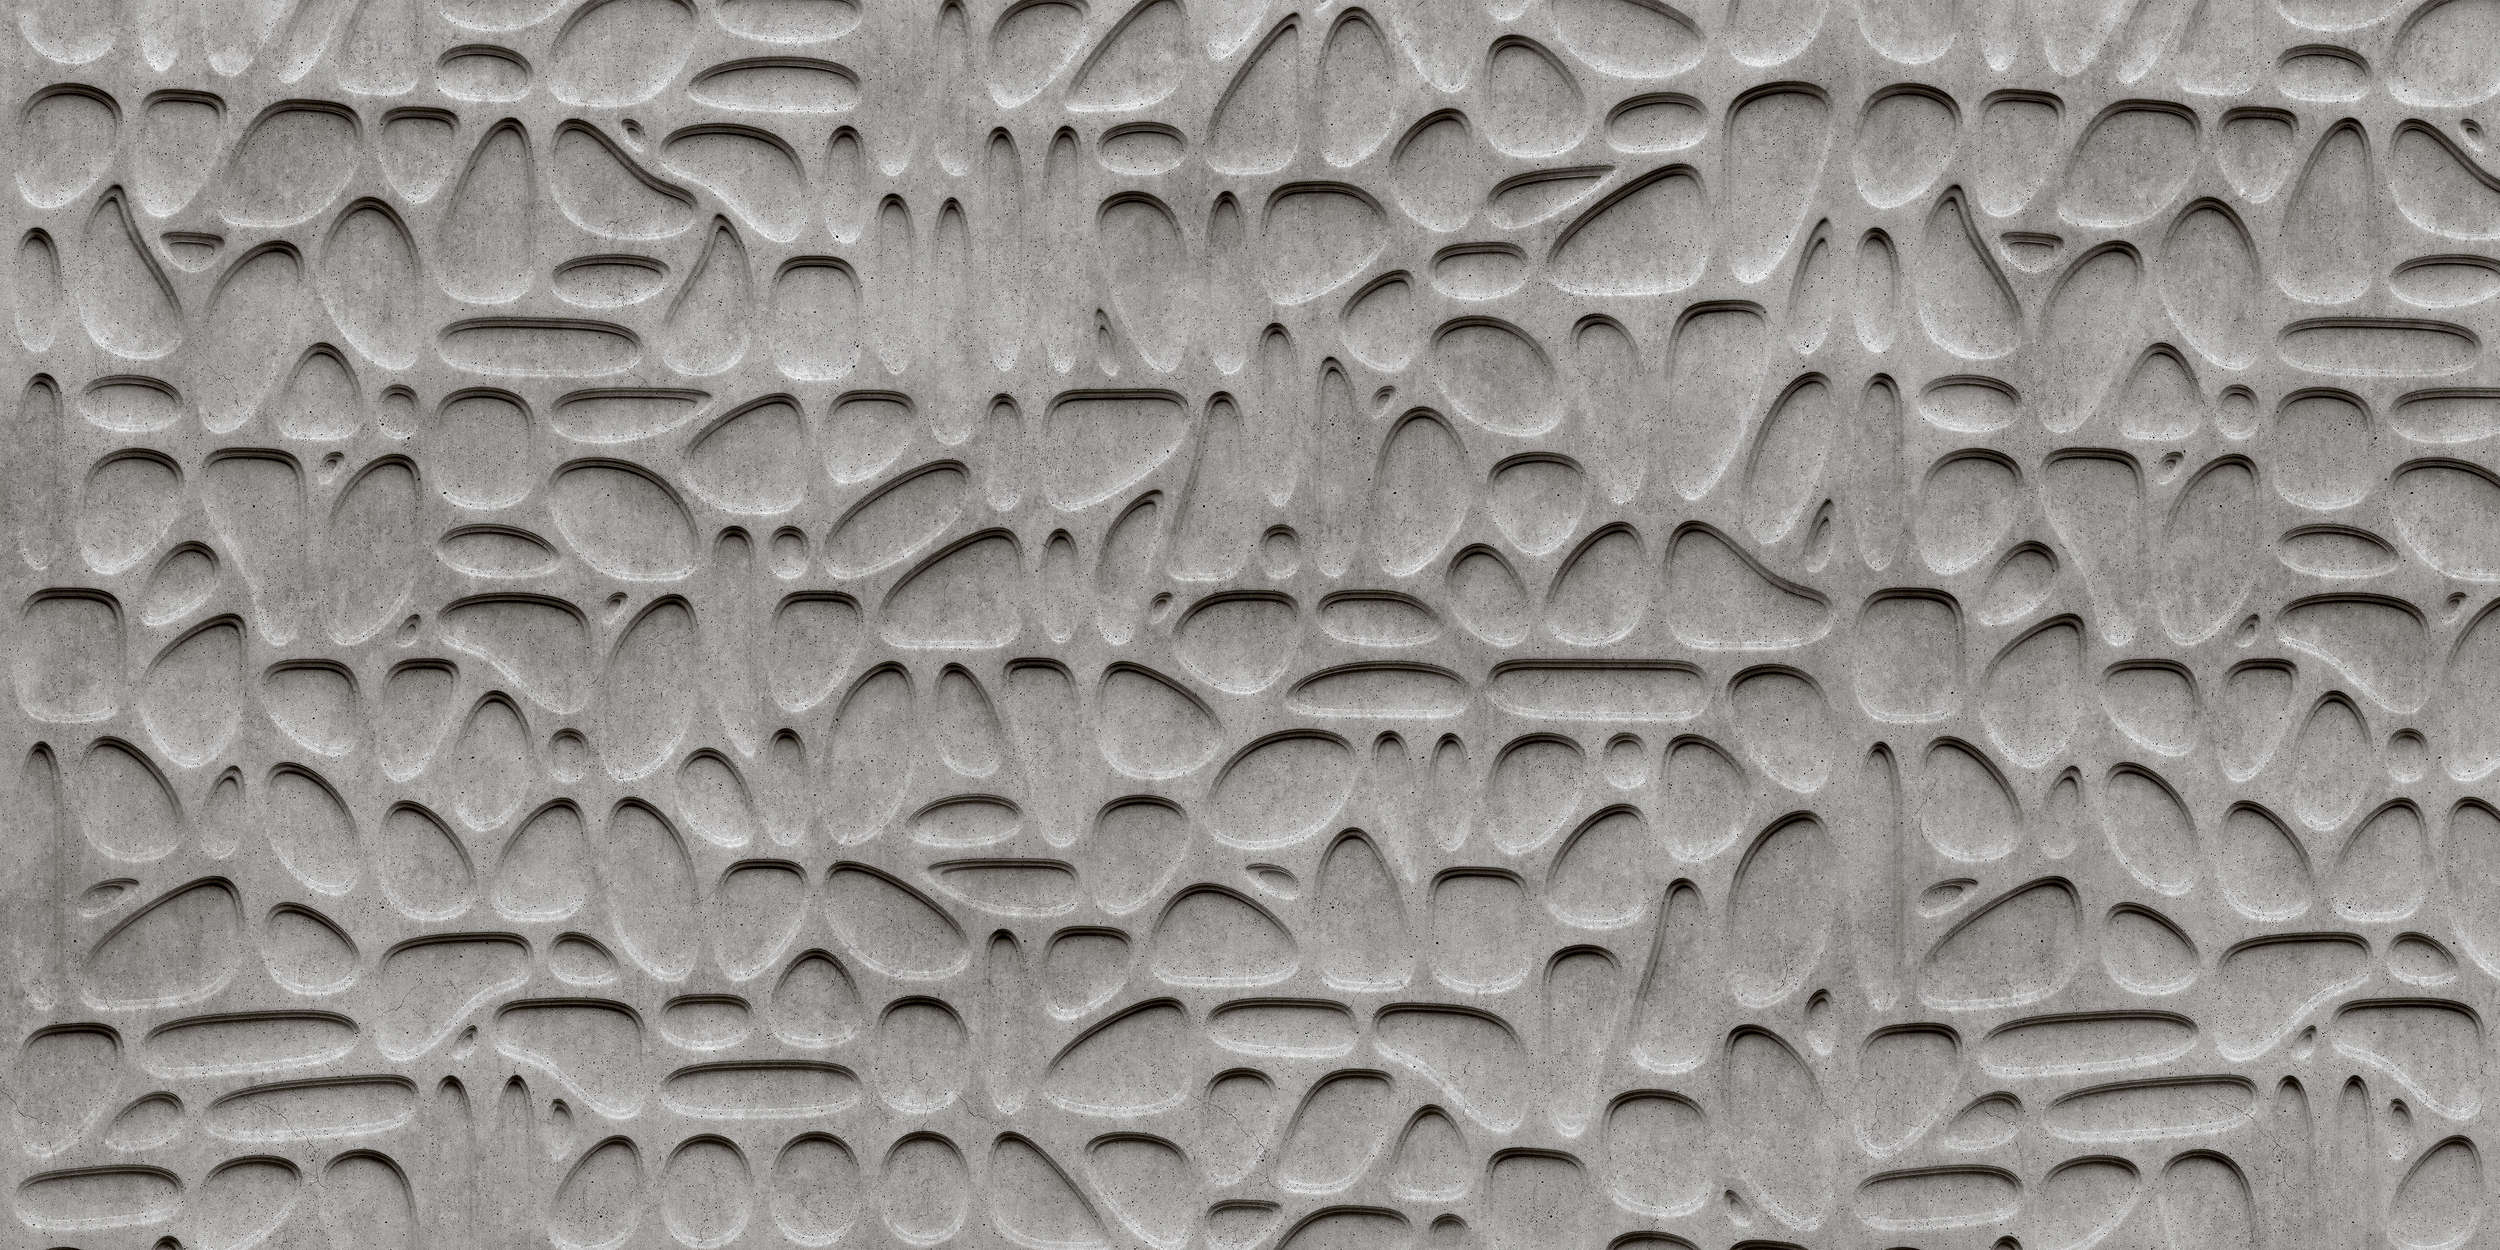             Maze 1 - Coole 3D Beton-Luftblasen Fototapete – Grau, Schwarz | Mattes Glattvlies
        